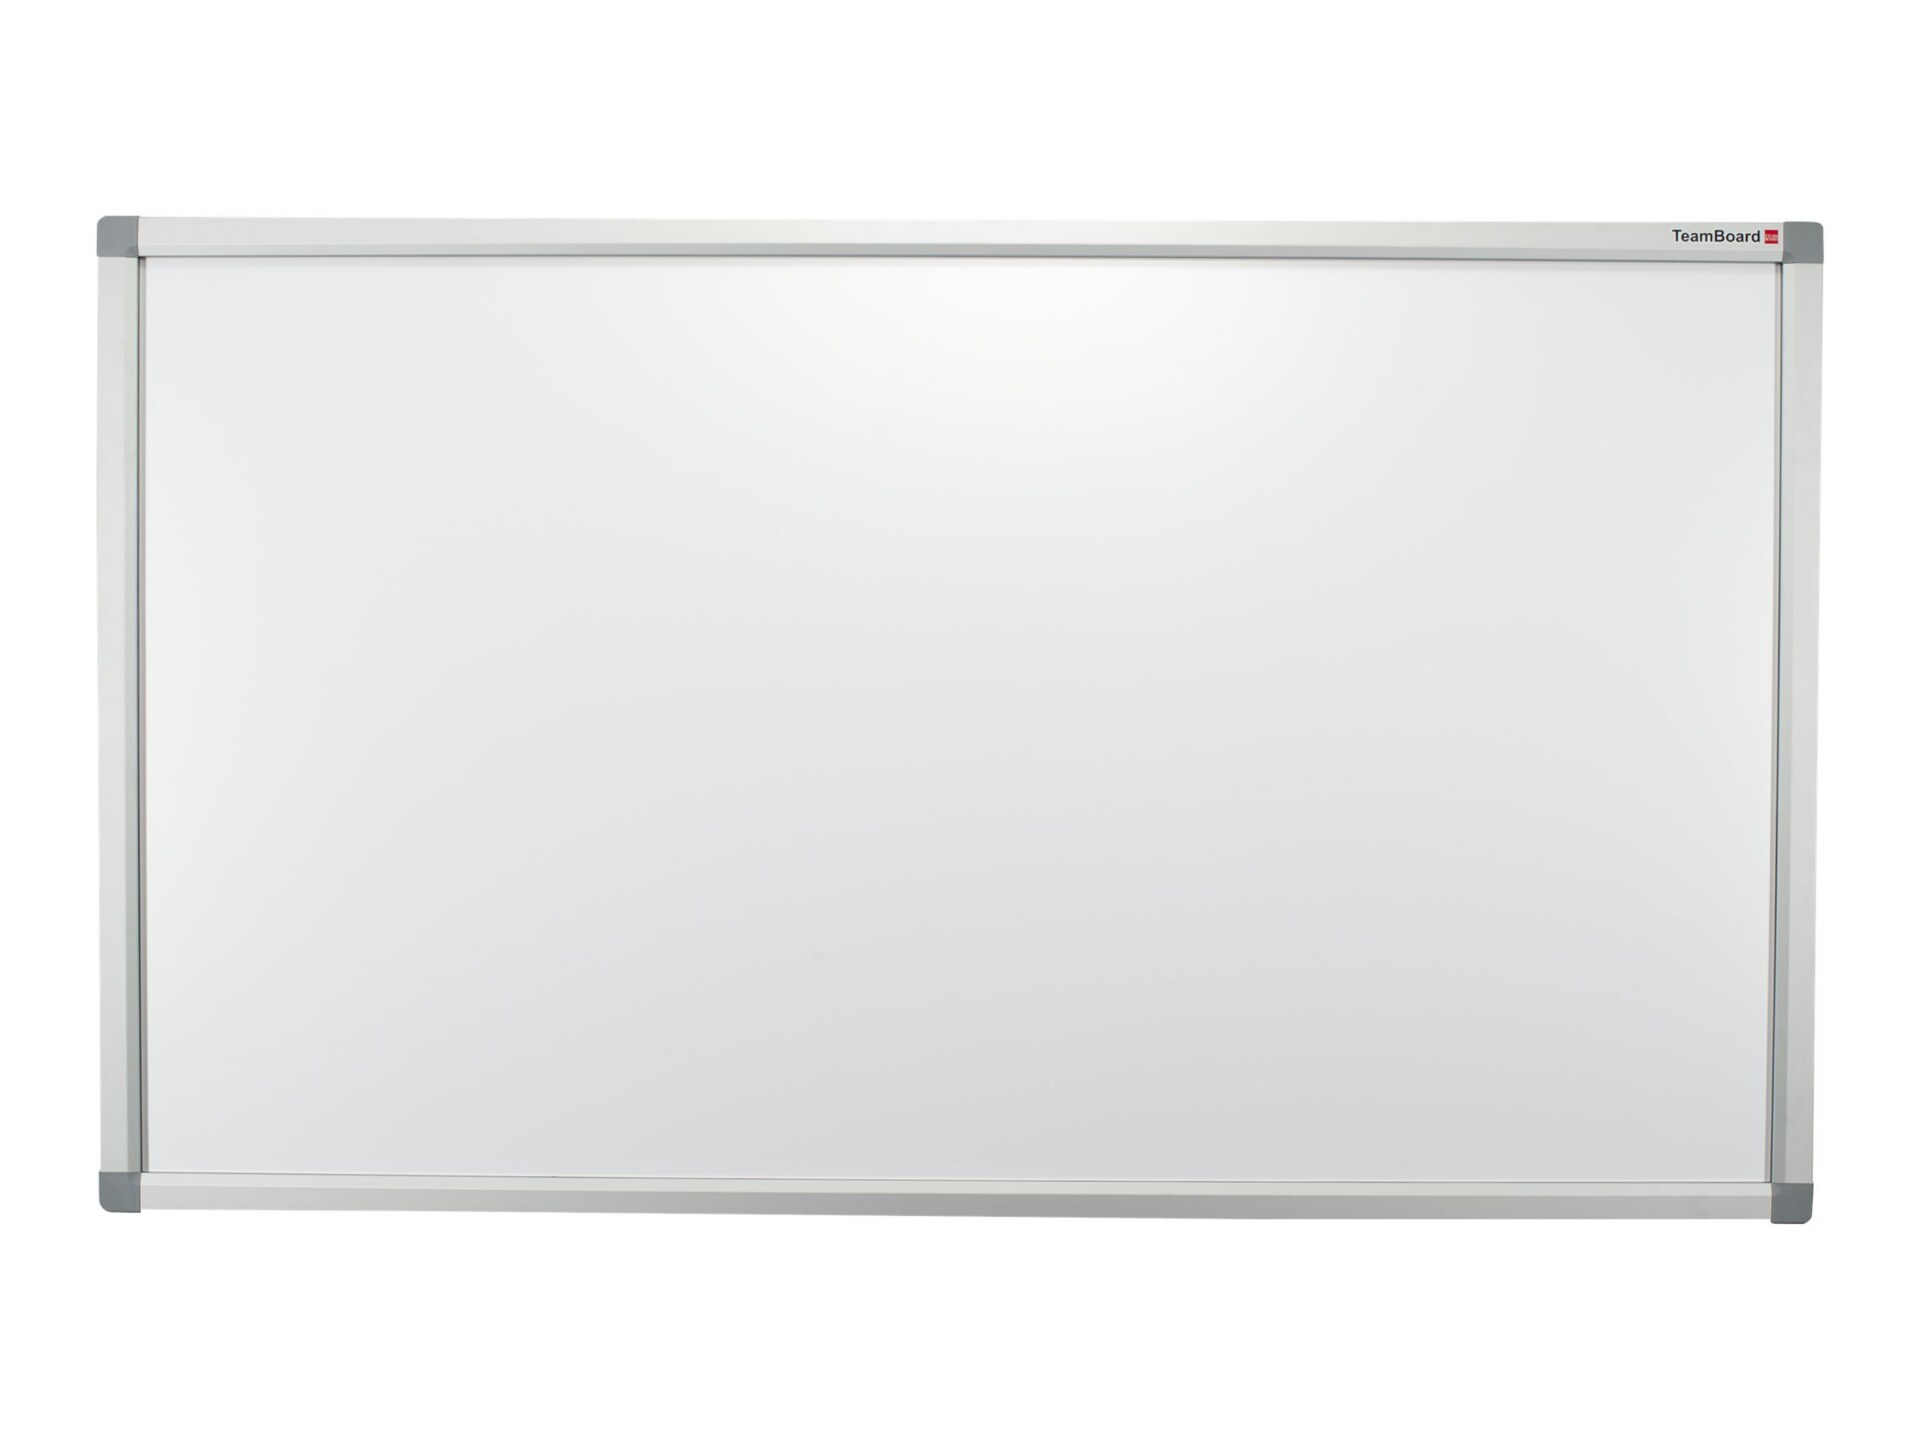 TeamBoard T499 - interactive whiteboard - USB